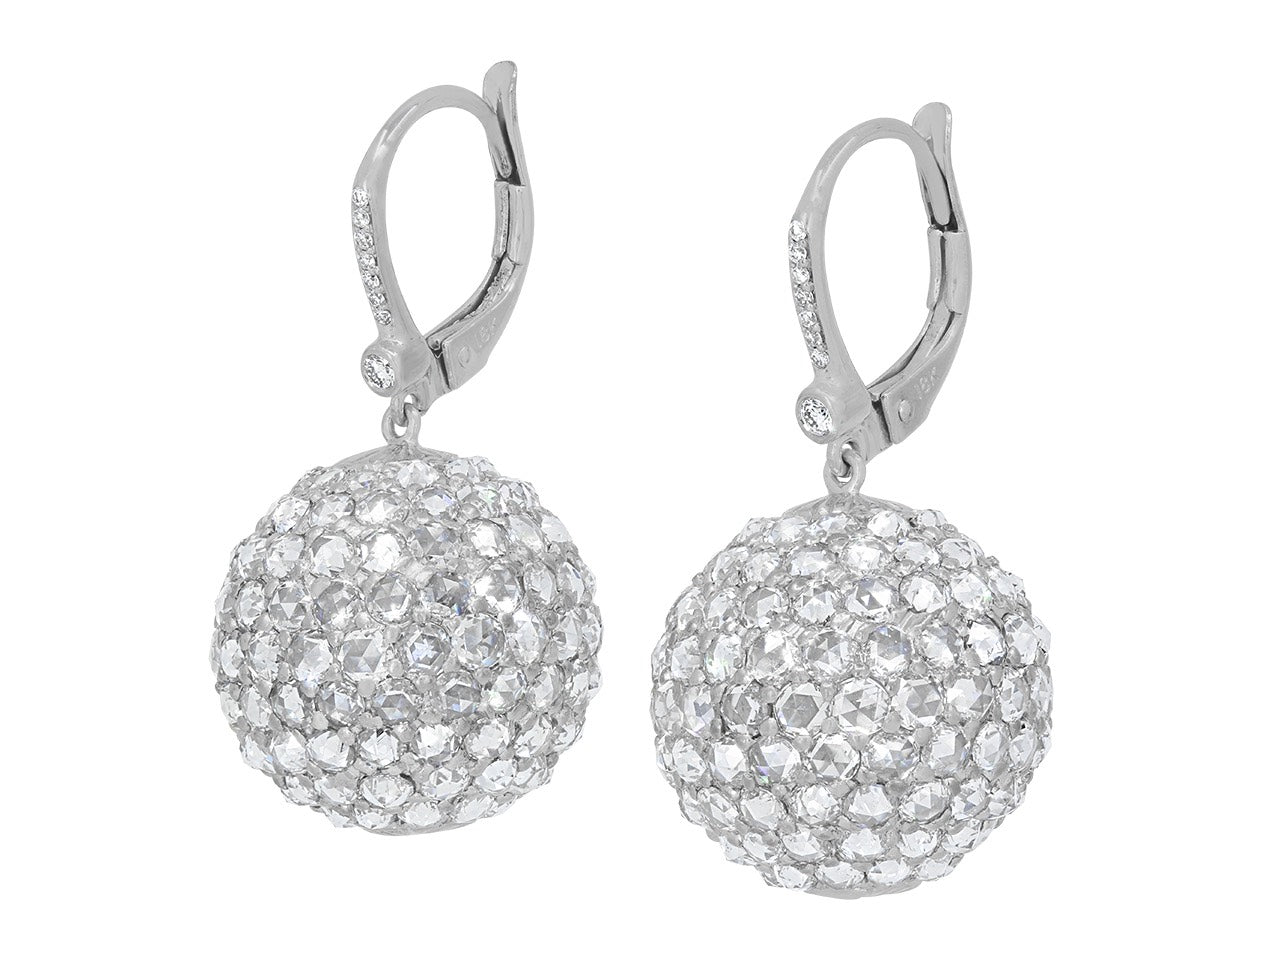 Beladora 'Bespoke' Rose-cut Diamond Ball Earrings in 18K White Gold